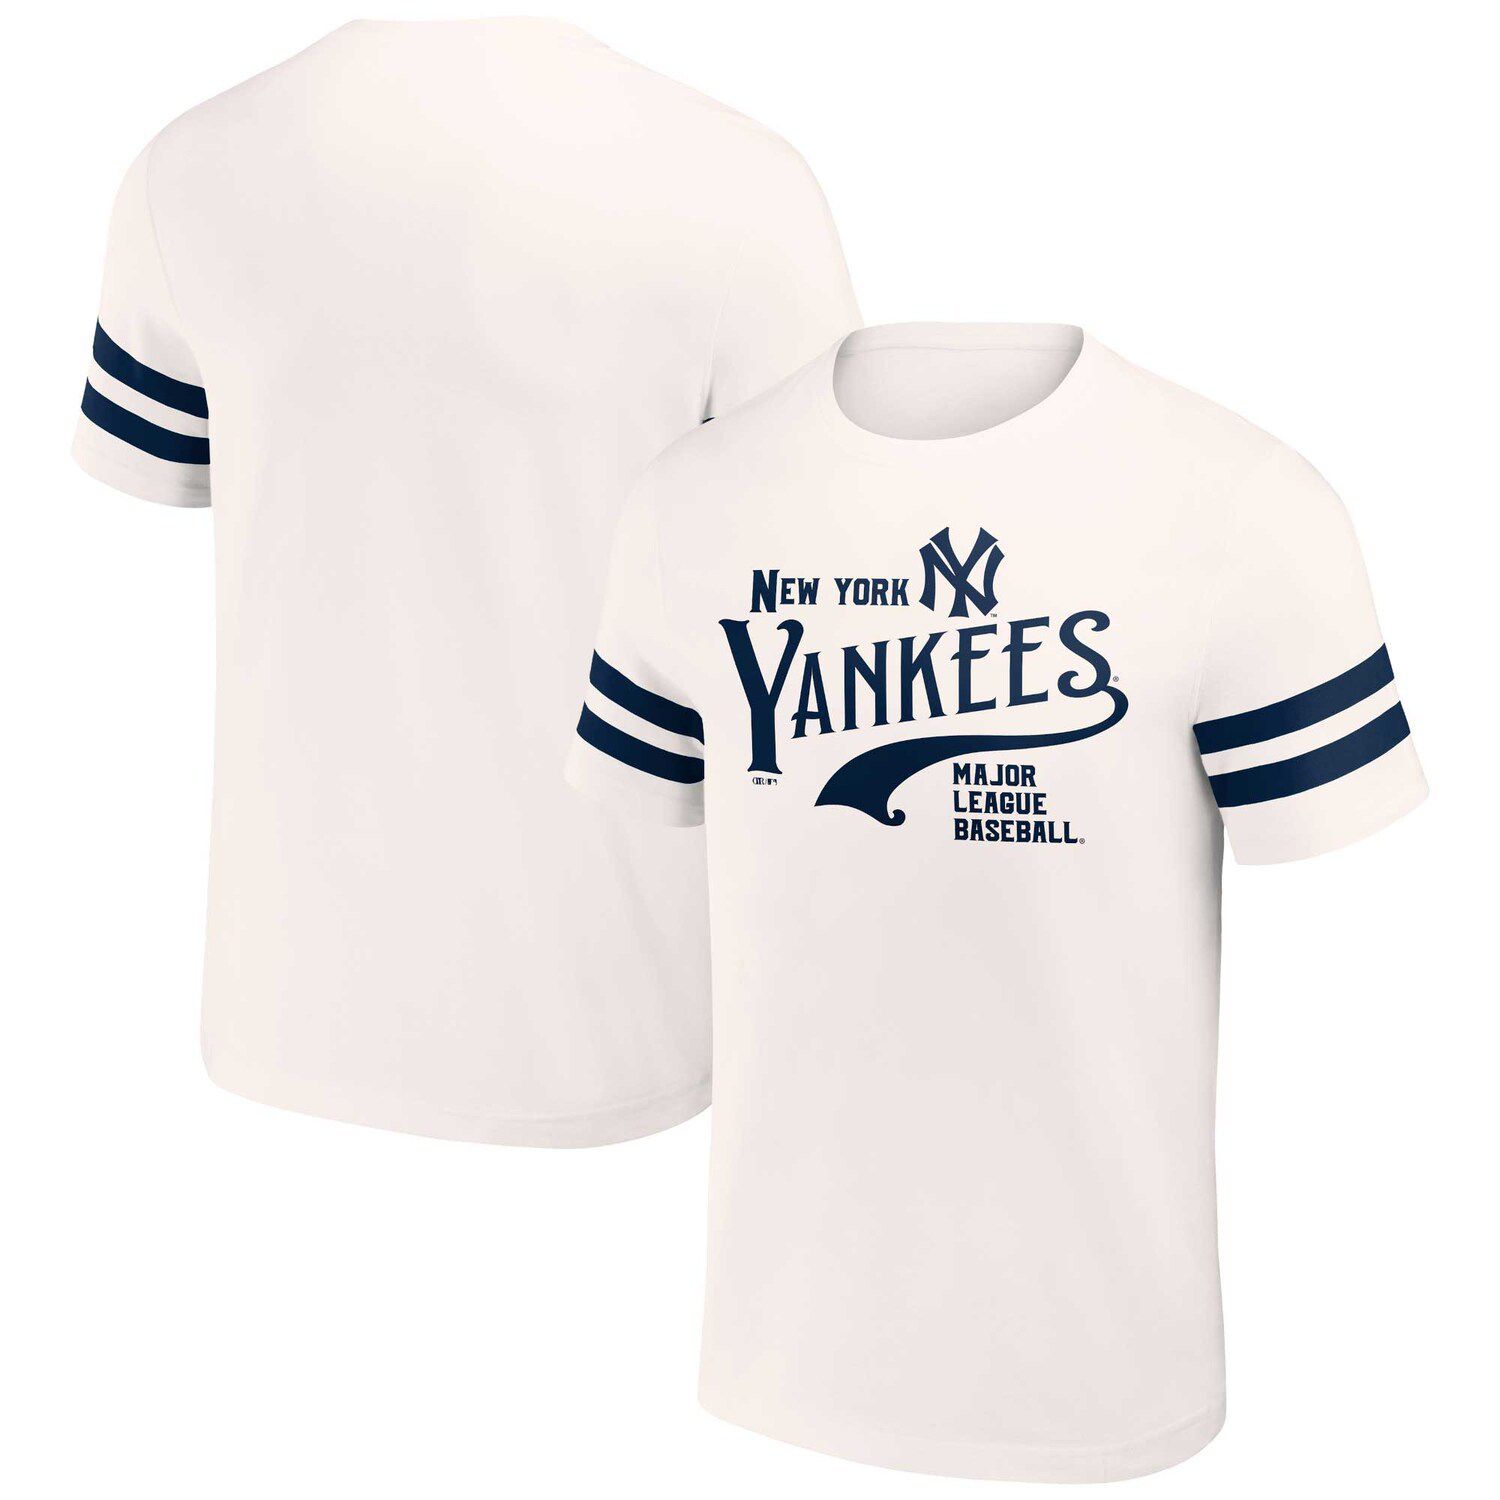 vintage yankee tee shirts